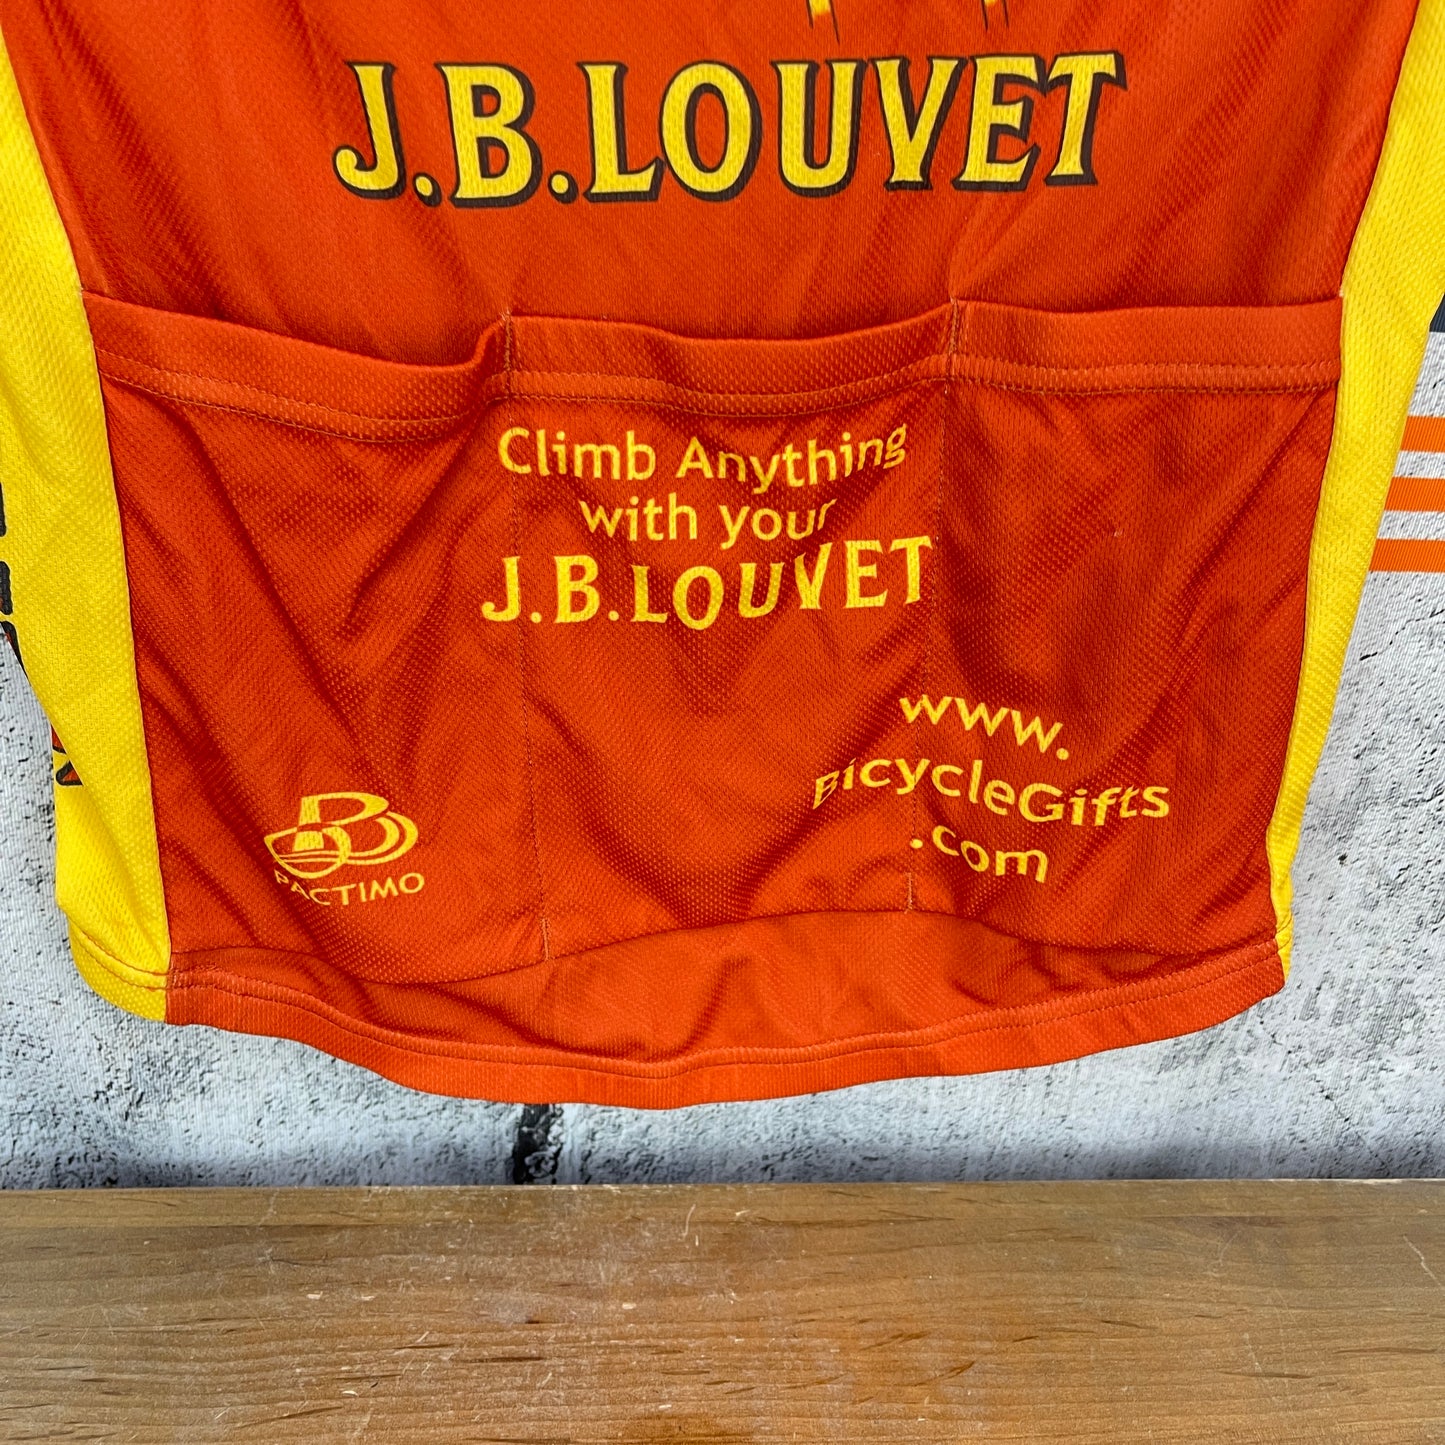 Pactimo J.B. Louvet Medium Women's Cycling Jersey Short Sleeve